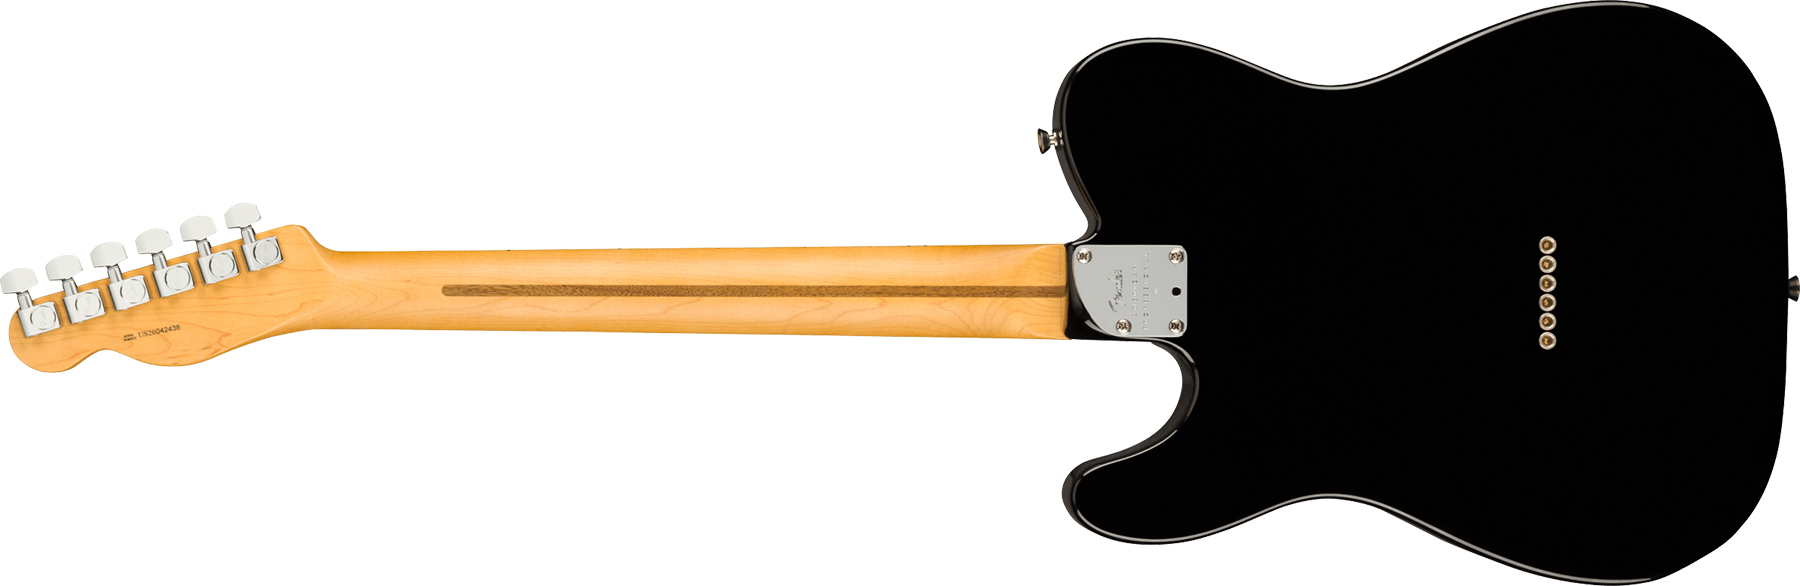 Fender Tele American Professional Ii Usa Mn - Black - Guitare Électrique Forme Tel - Variation 1